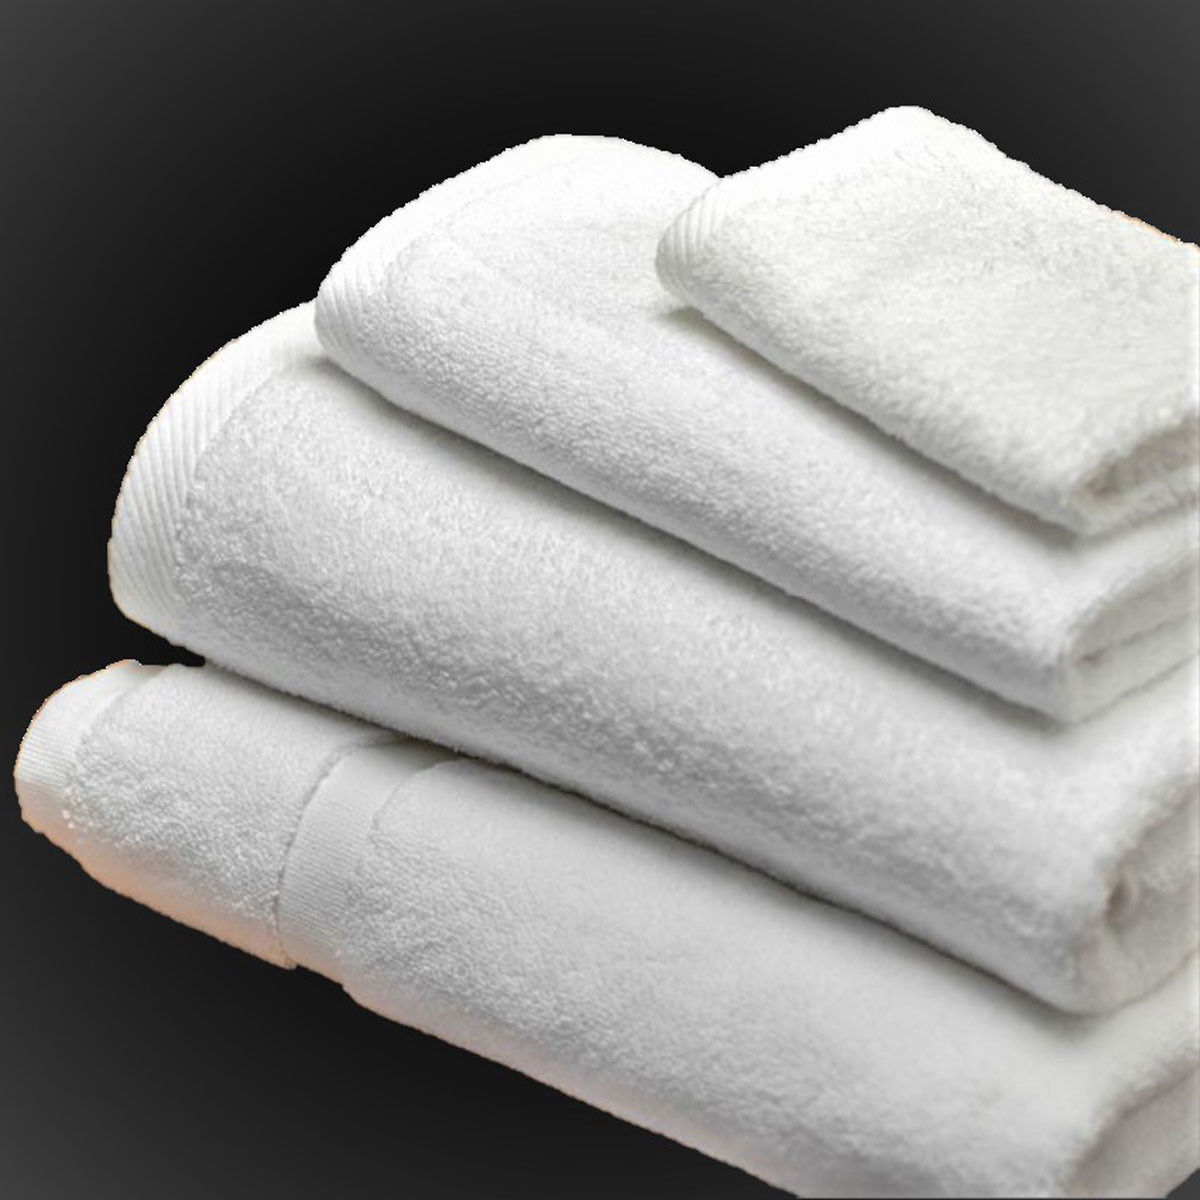 Do bulk bath towels wholesale absorb water well?